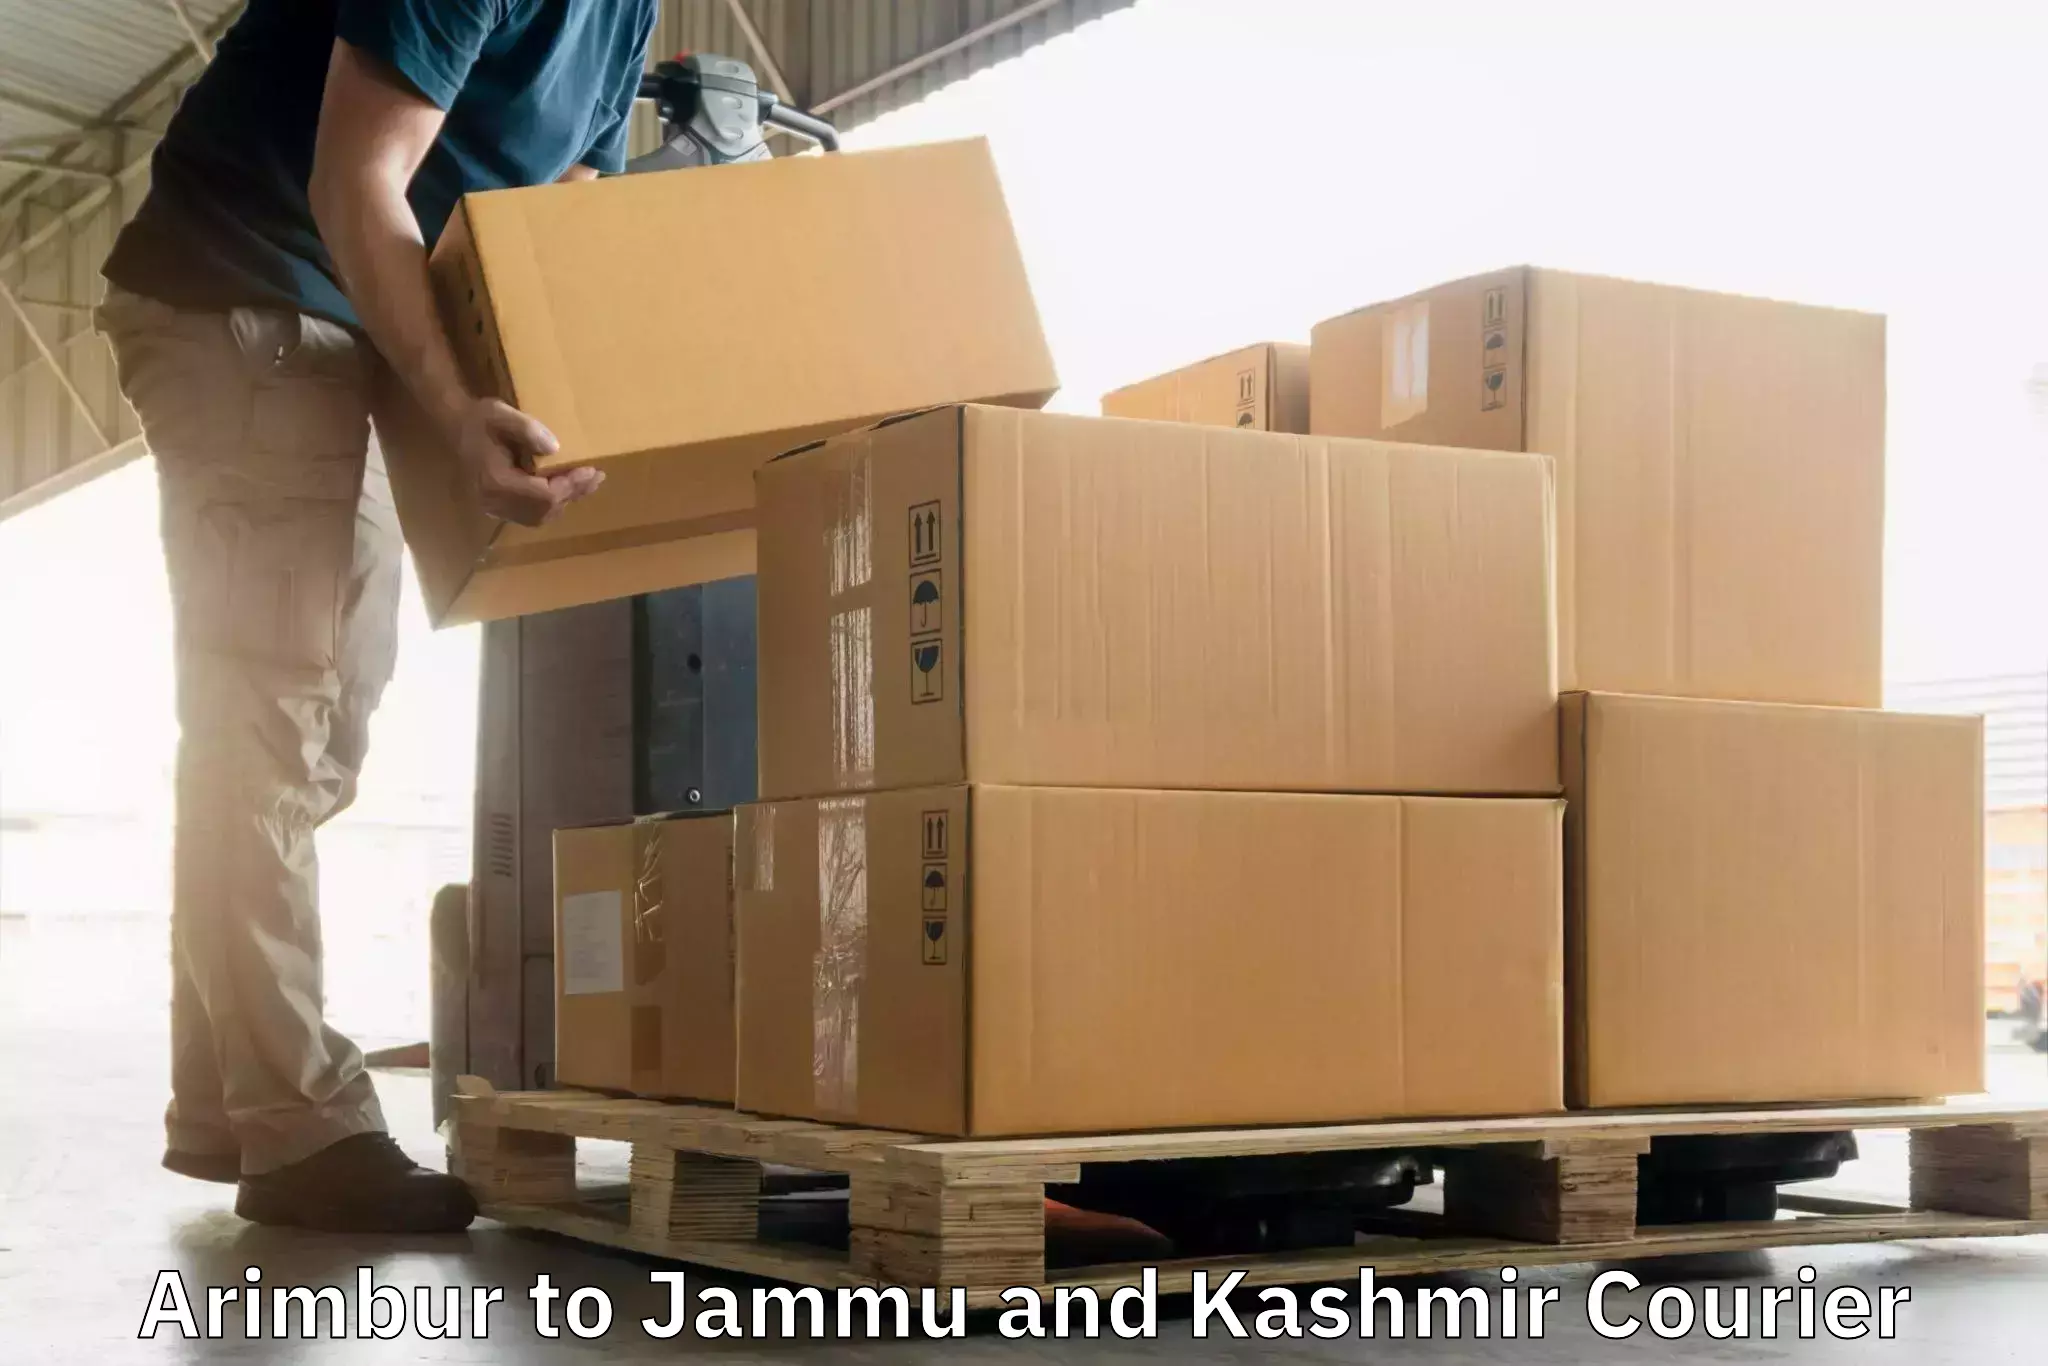 High-speed parcel service Arimbur to Udhampur